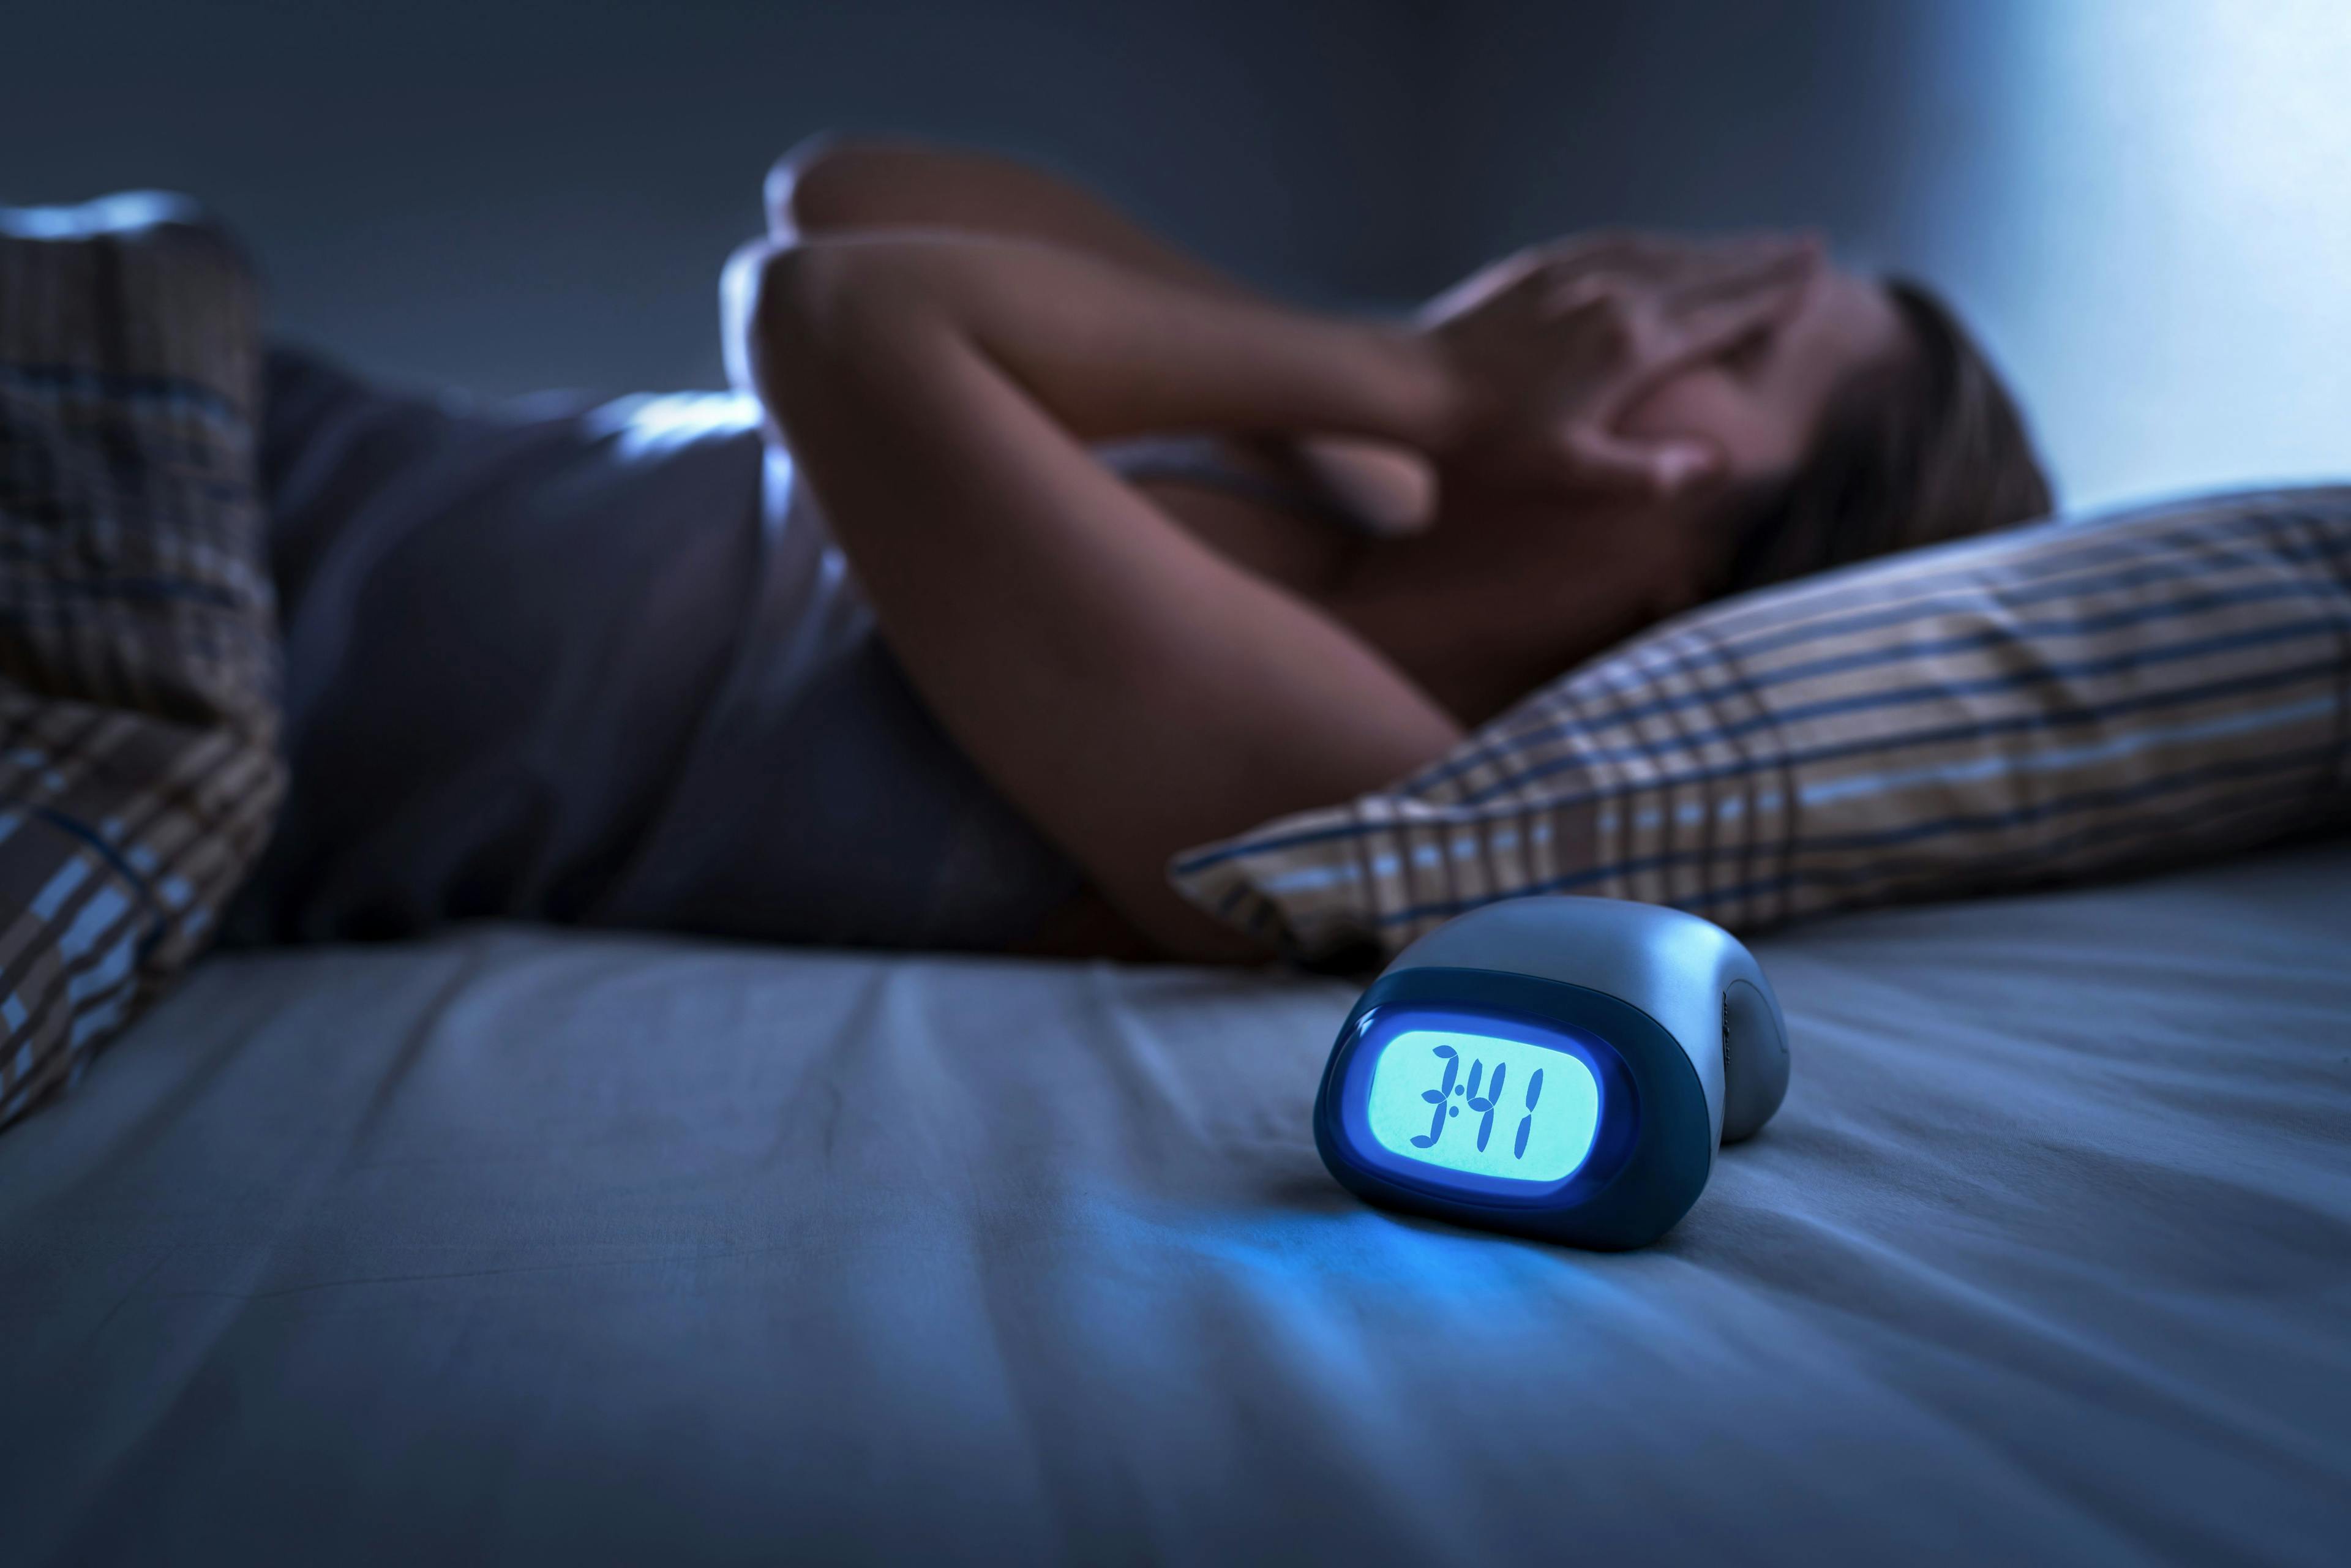 Acetazolamide Treatment Could Help Improve Obstructive Sleep Apnea